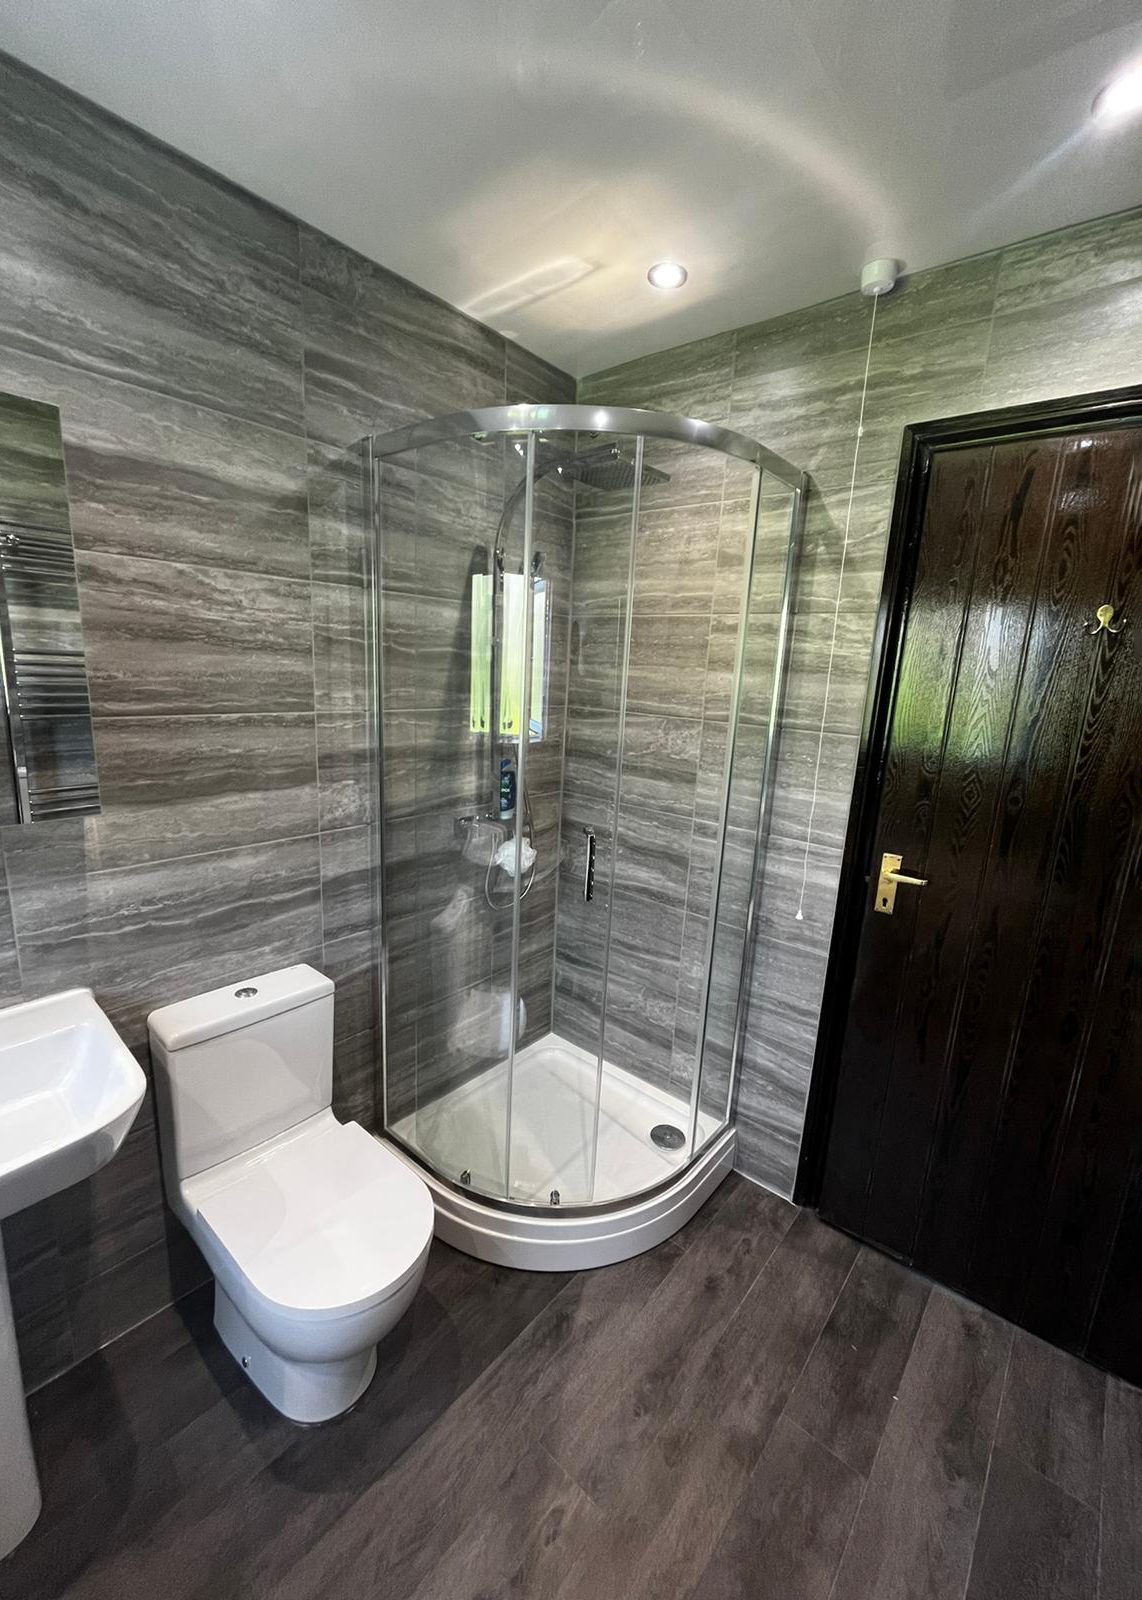 Bathroom toilet shower Installation Services In Huddersfield